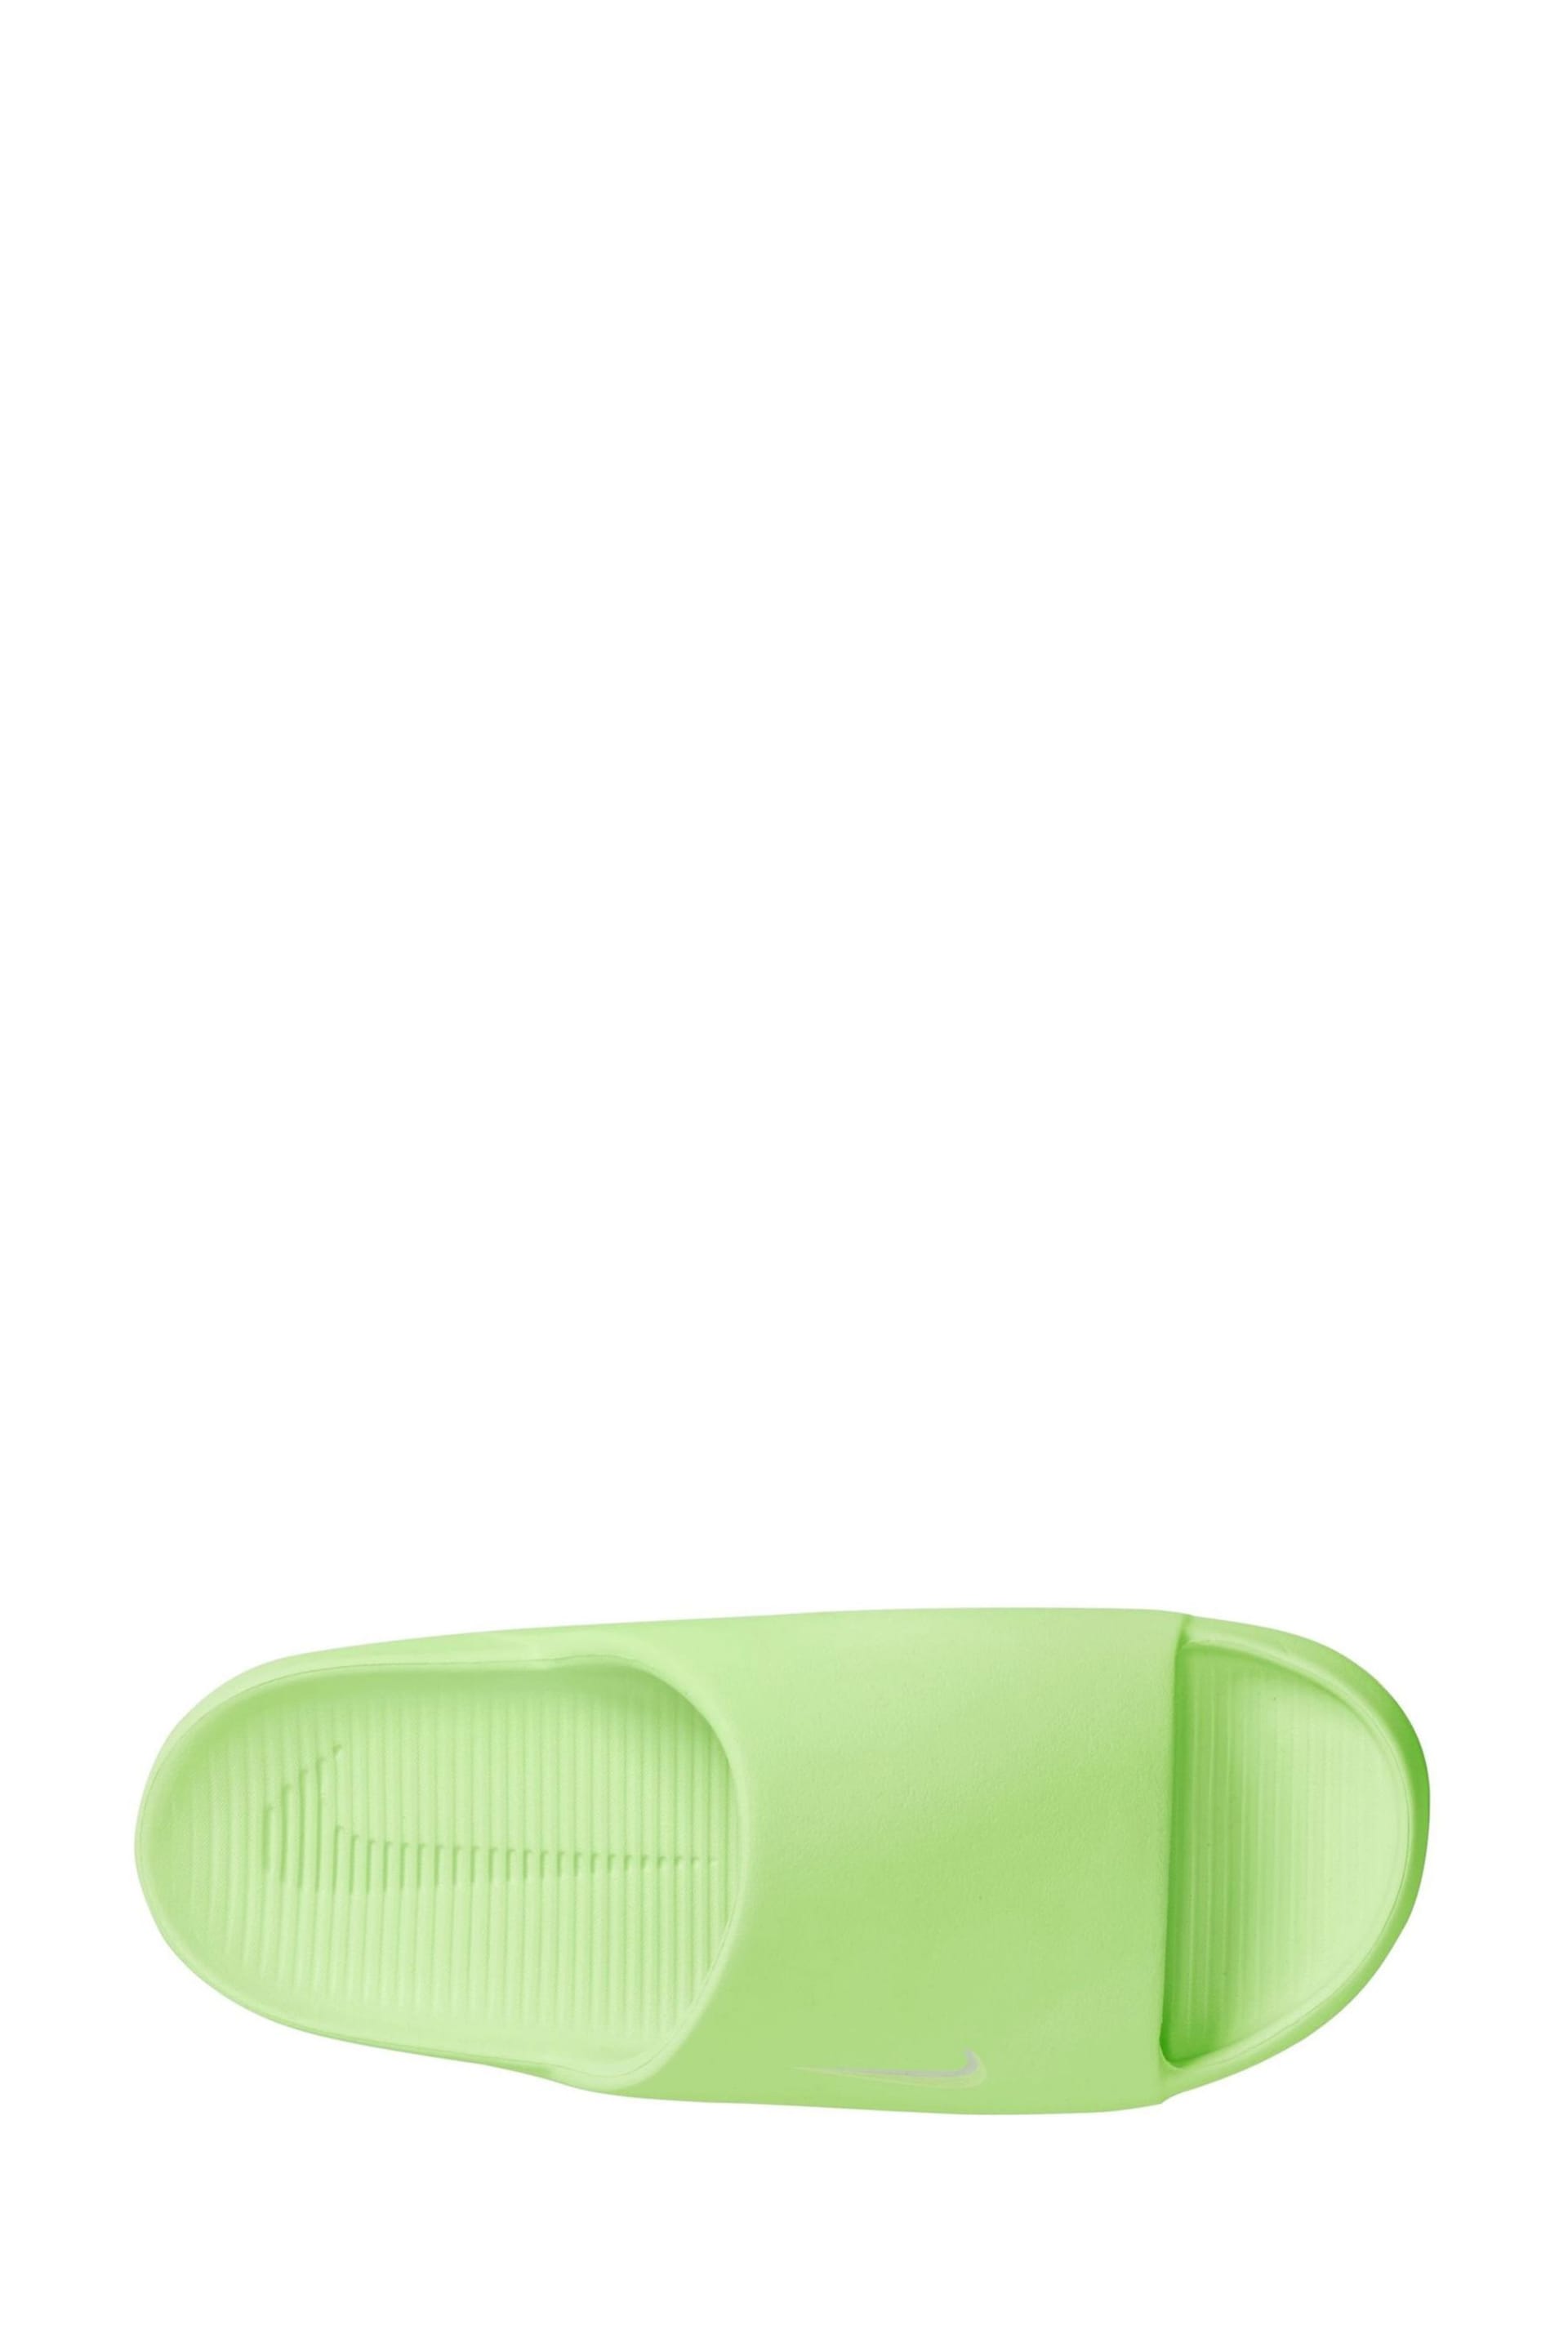 Nike Lime Green Calm Sliders - Image 3 of 9